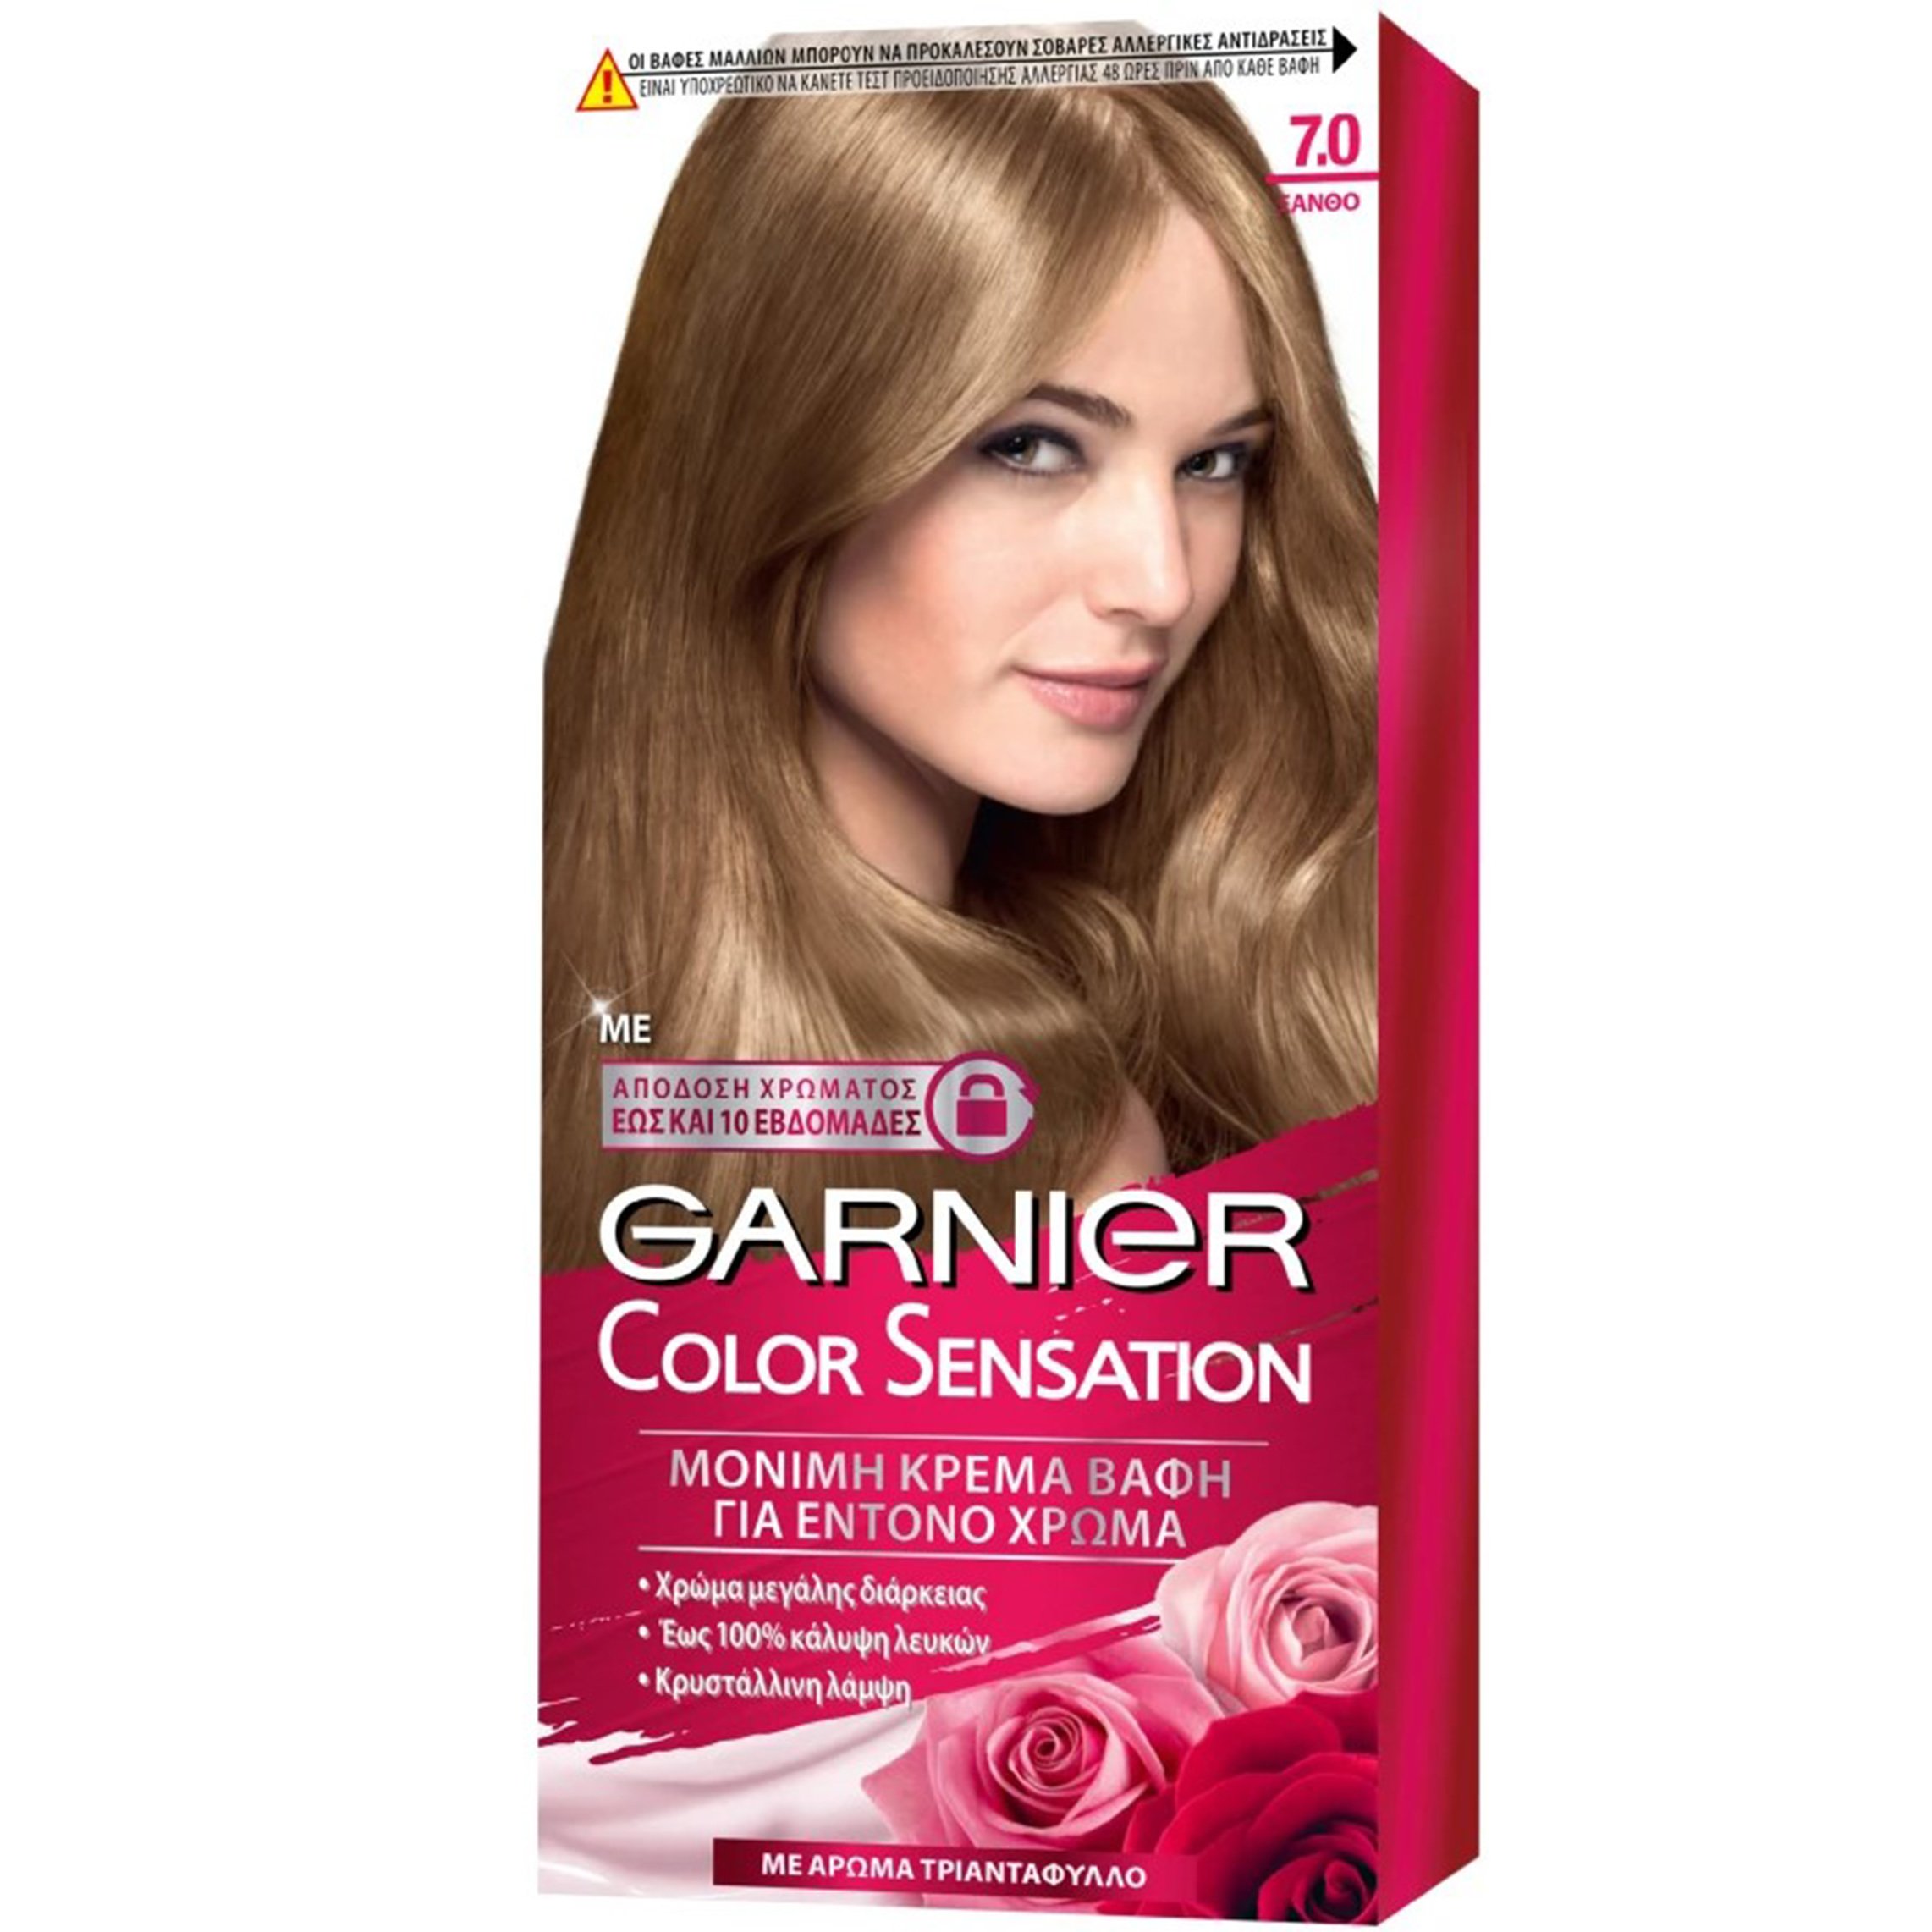 Garnier Color Sensation Permanent Hair Color Kit Μόνιμη Κρέμα Βαφή Μαλλιών με Άρωμα Τριαντάφυλλο 1 Τεμάχιο – 7.0 Ξανθό